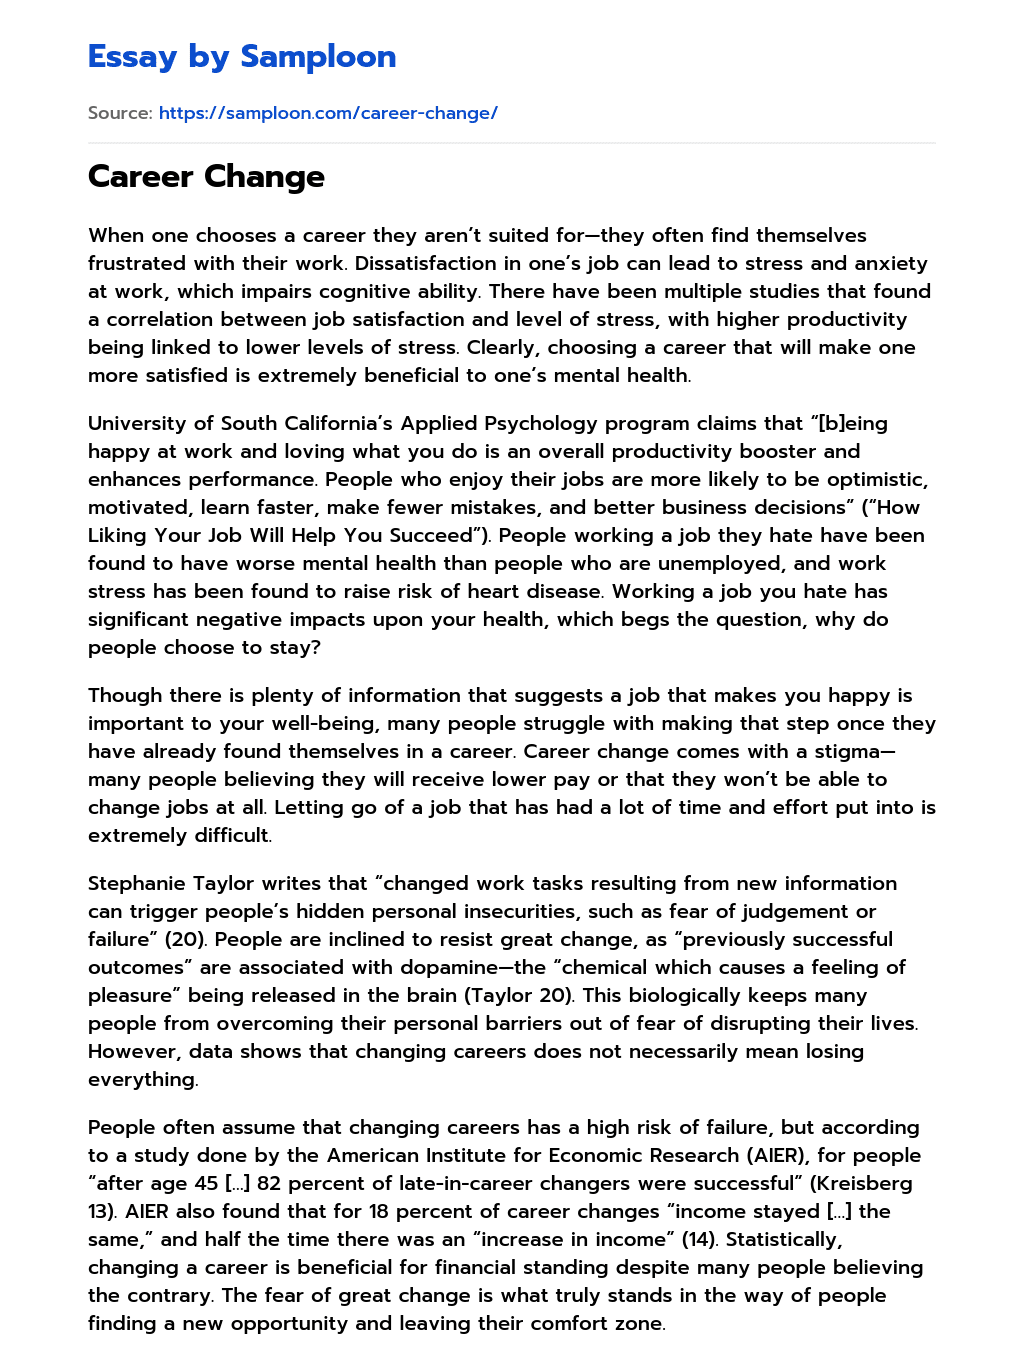 Career Change essay